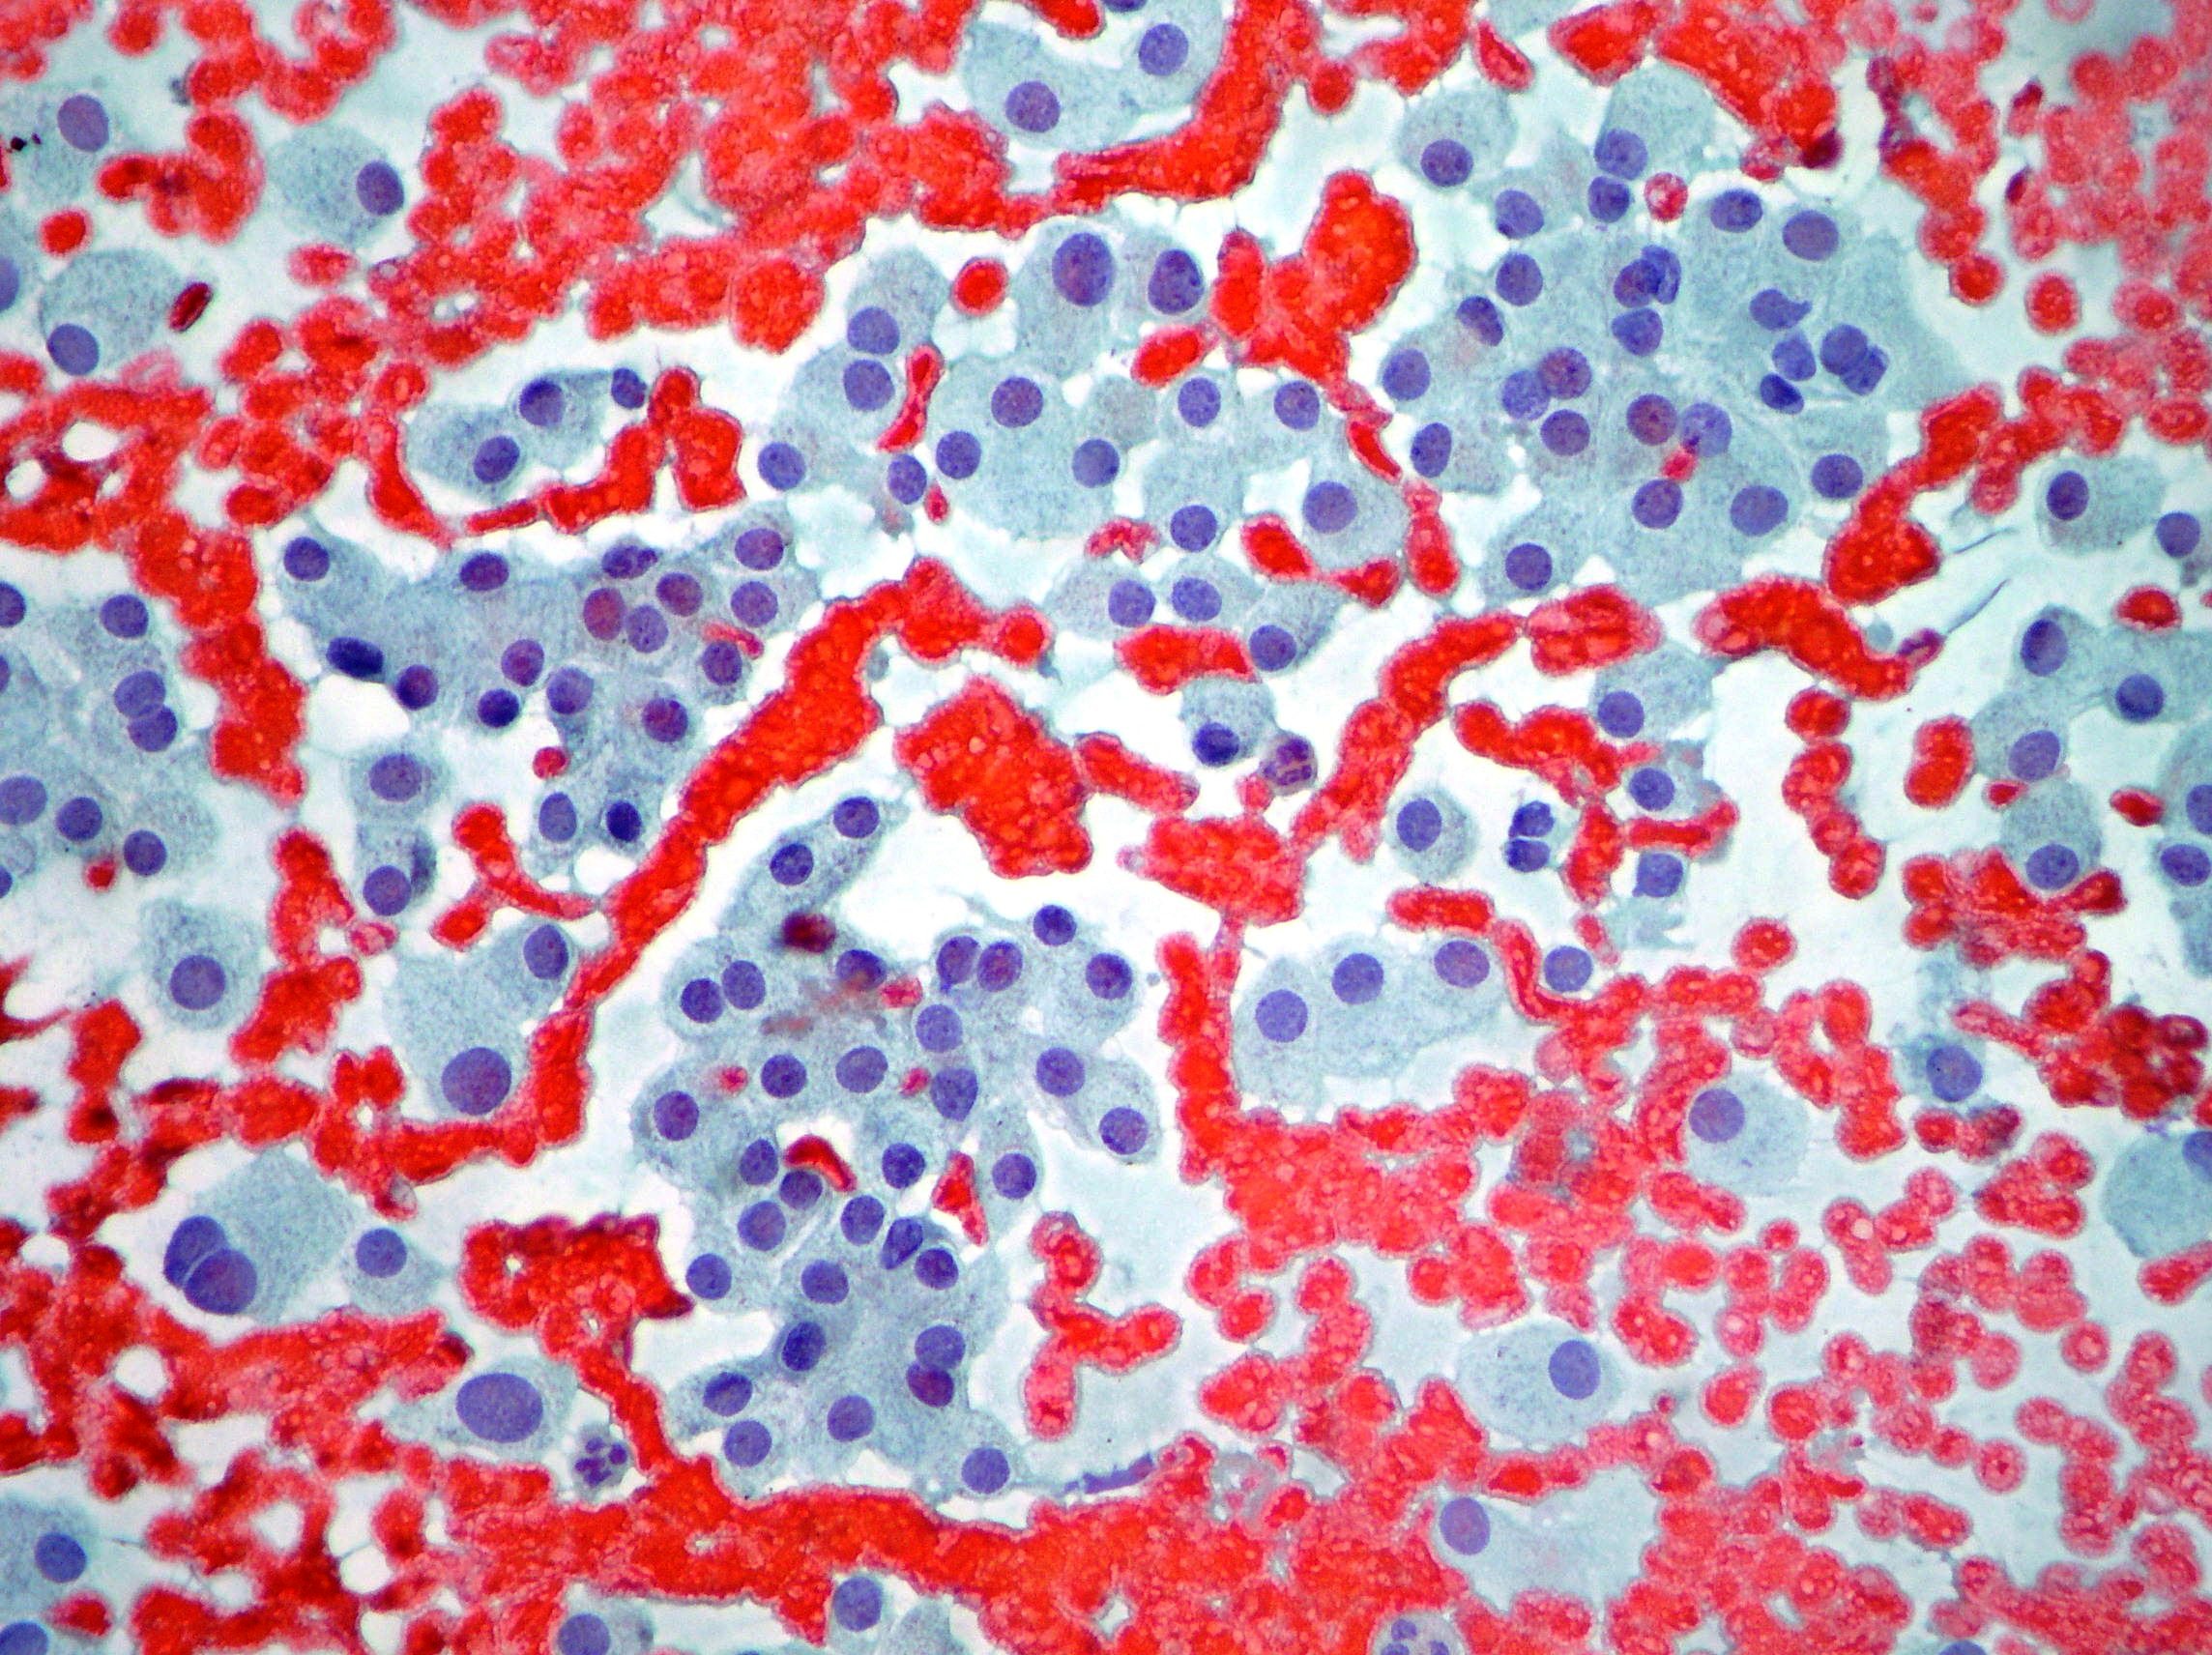 Medullary carcinoma cells